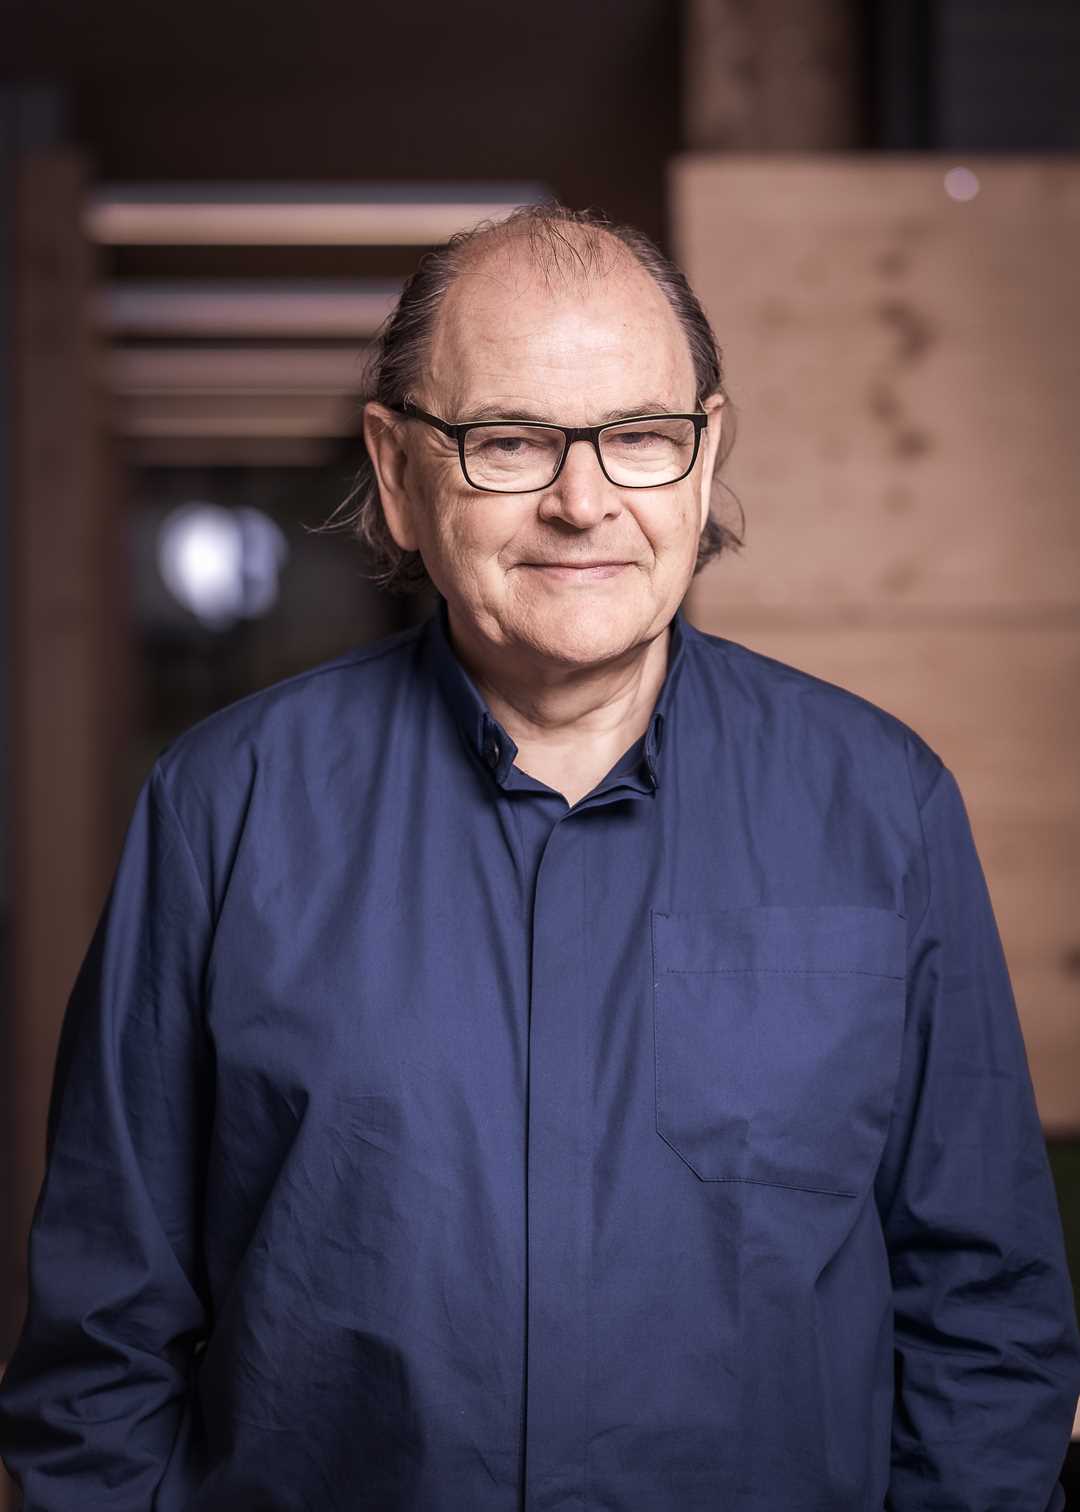 Rudy Van Kerckhove